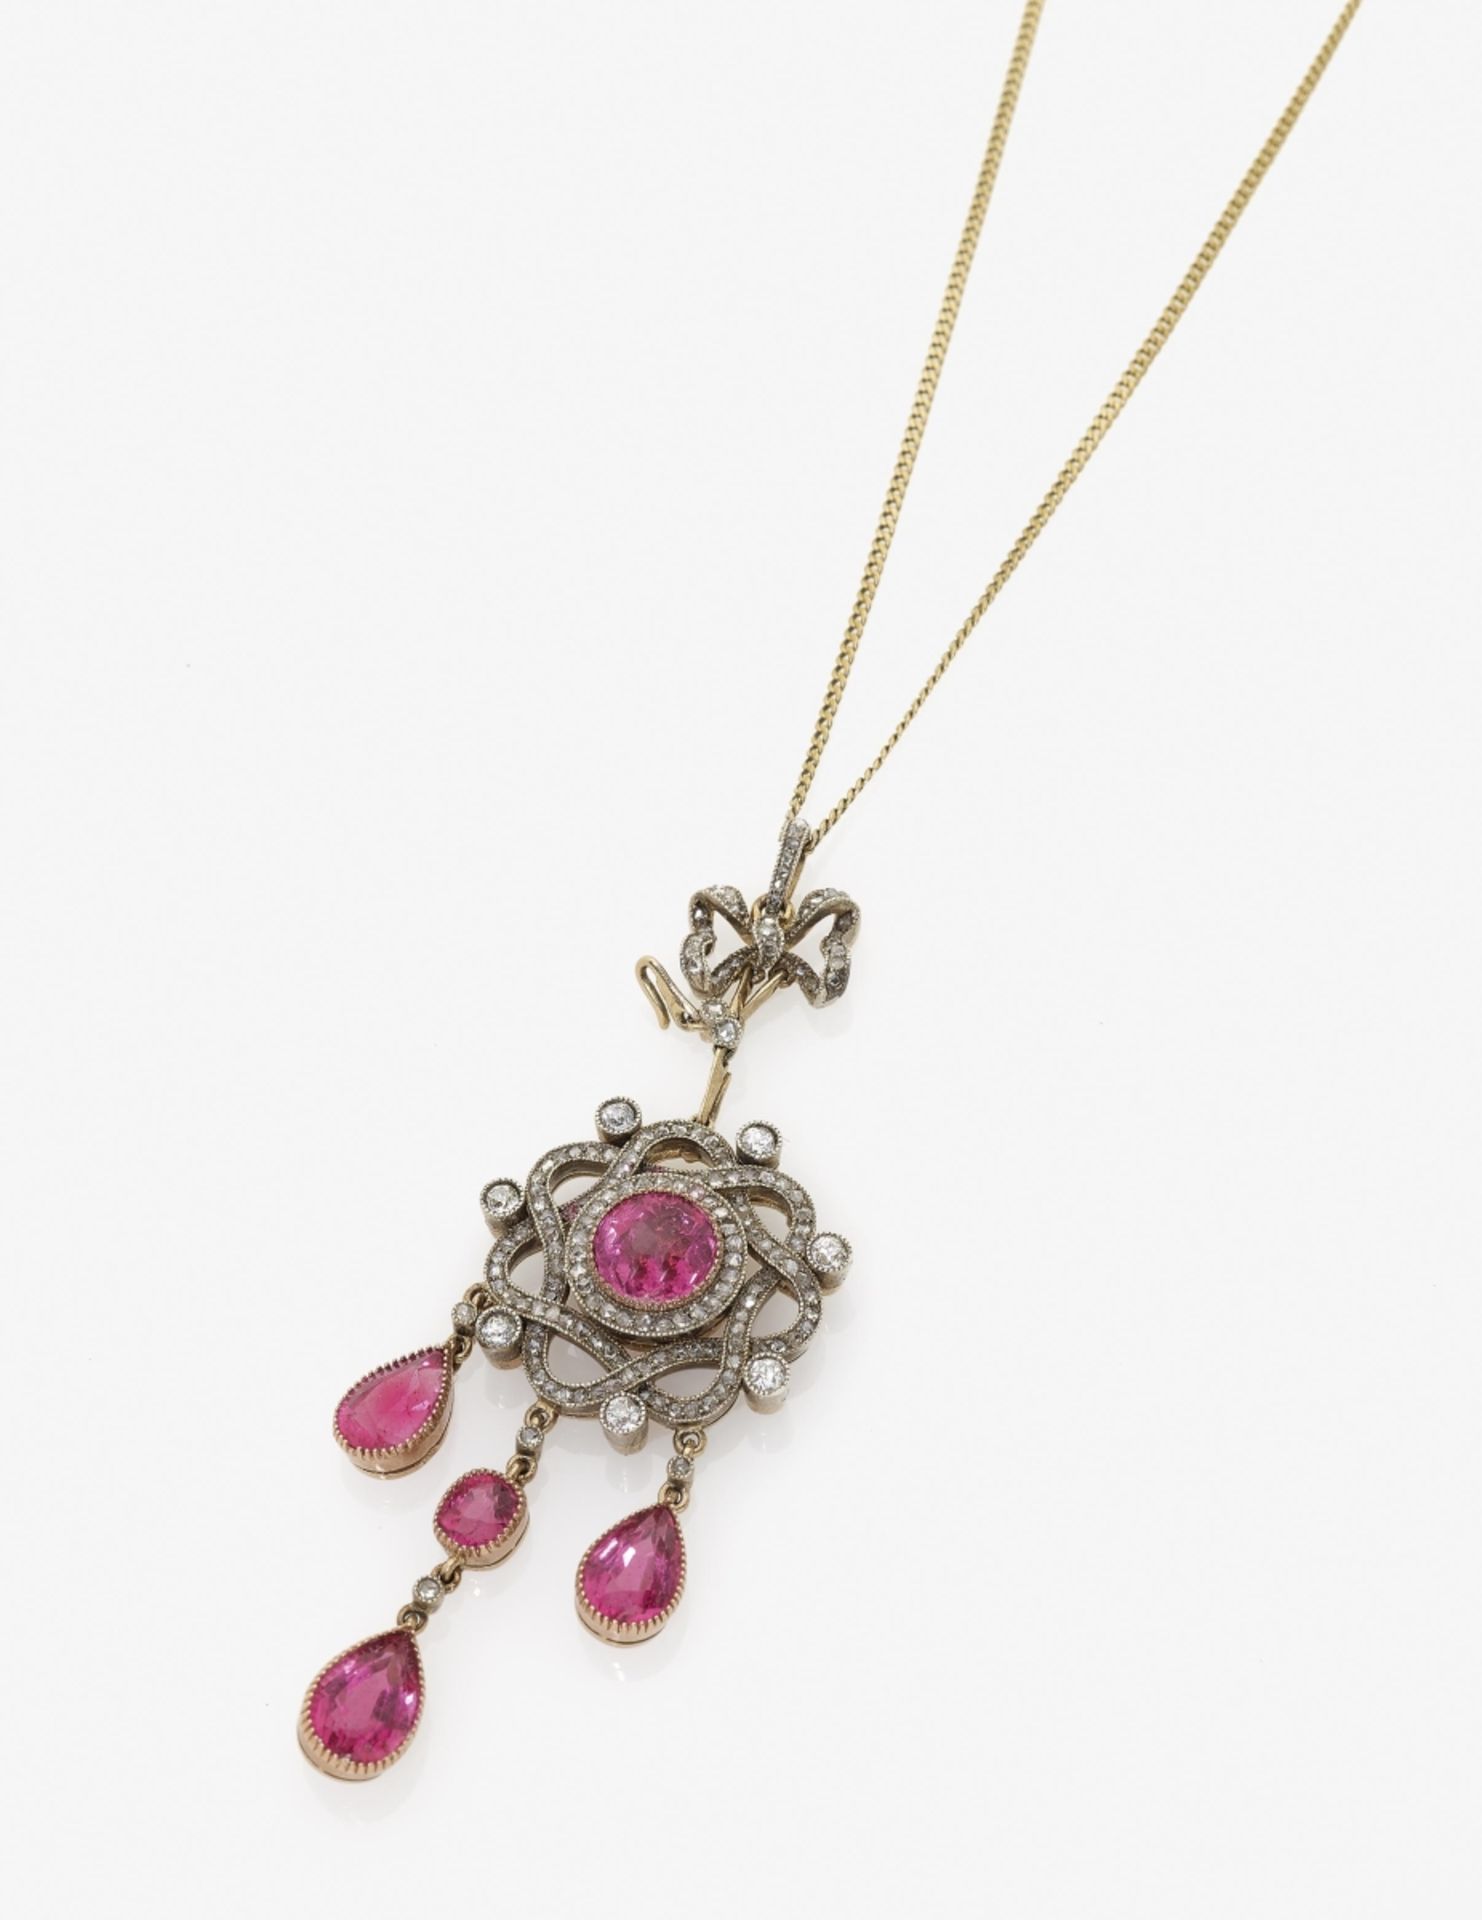 A Pink Tourmaline and Diamond Pendant NecklaceSt. Petersburg, circa 1900, FABERGÉ 14K Gold (